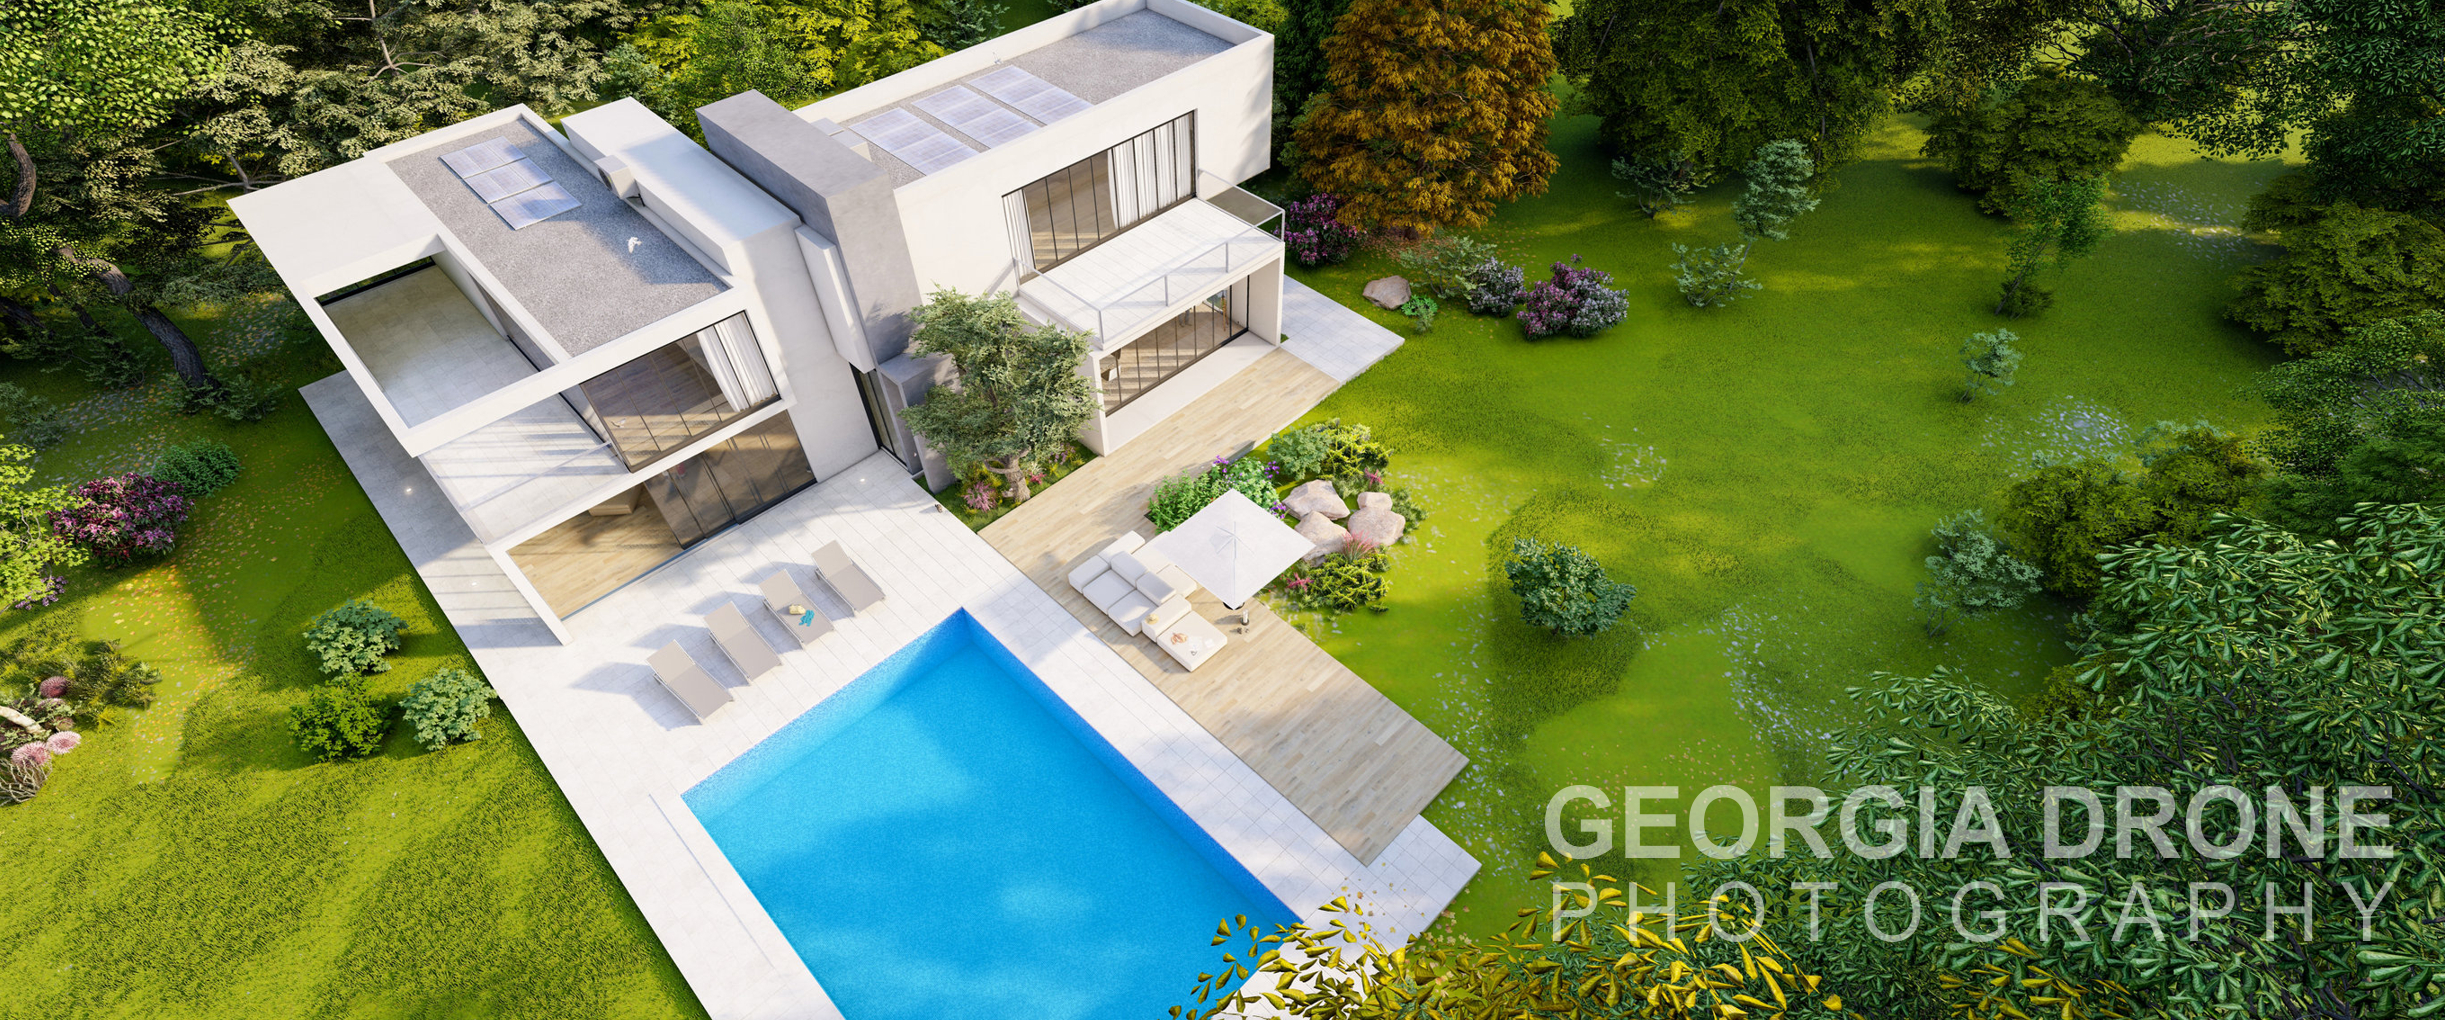 drone photography alpharetta georgia residential real estate